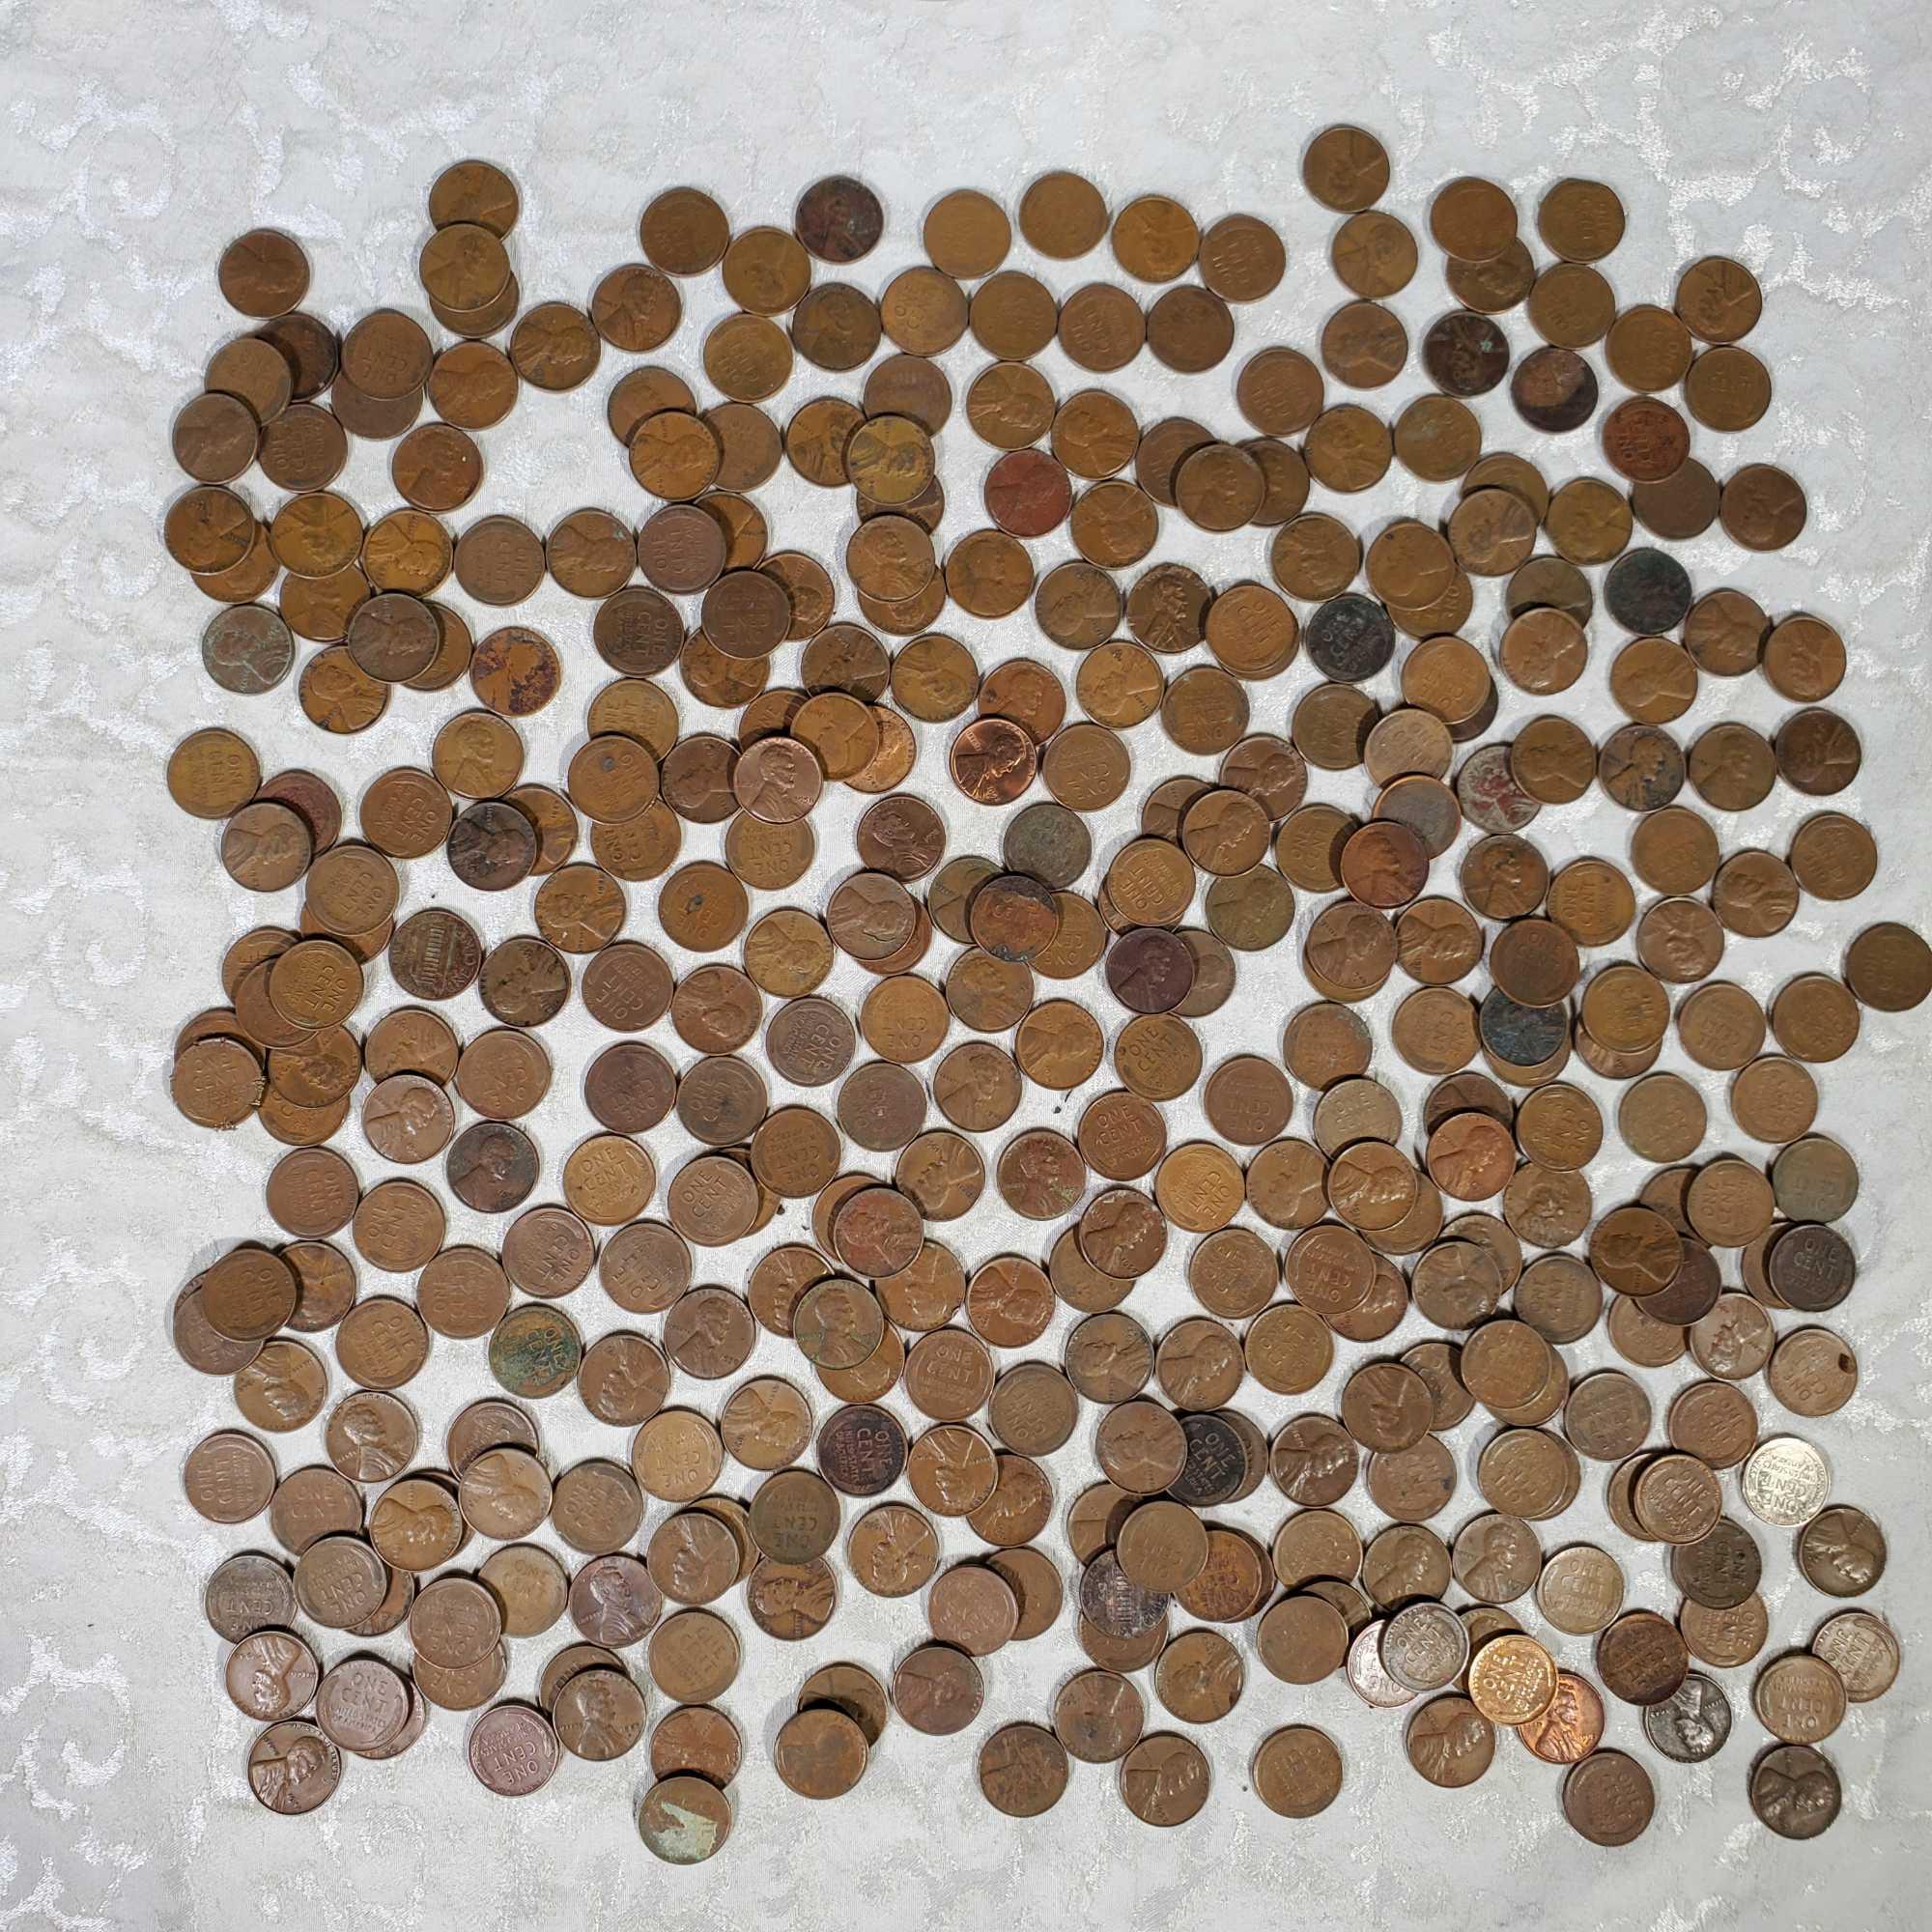 Approx. 20 Pounds Lincoln Wheat Pennies Incl Approx 4 lb Zinc/Steel War Era